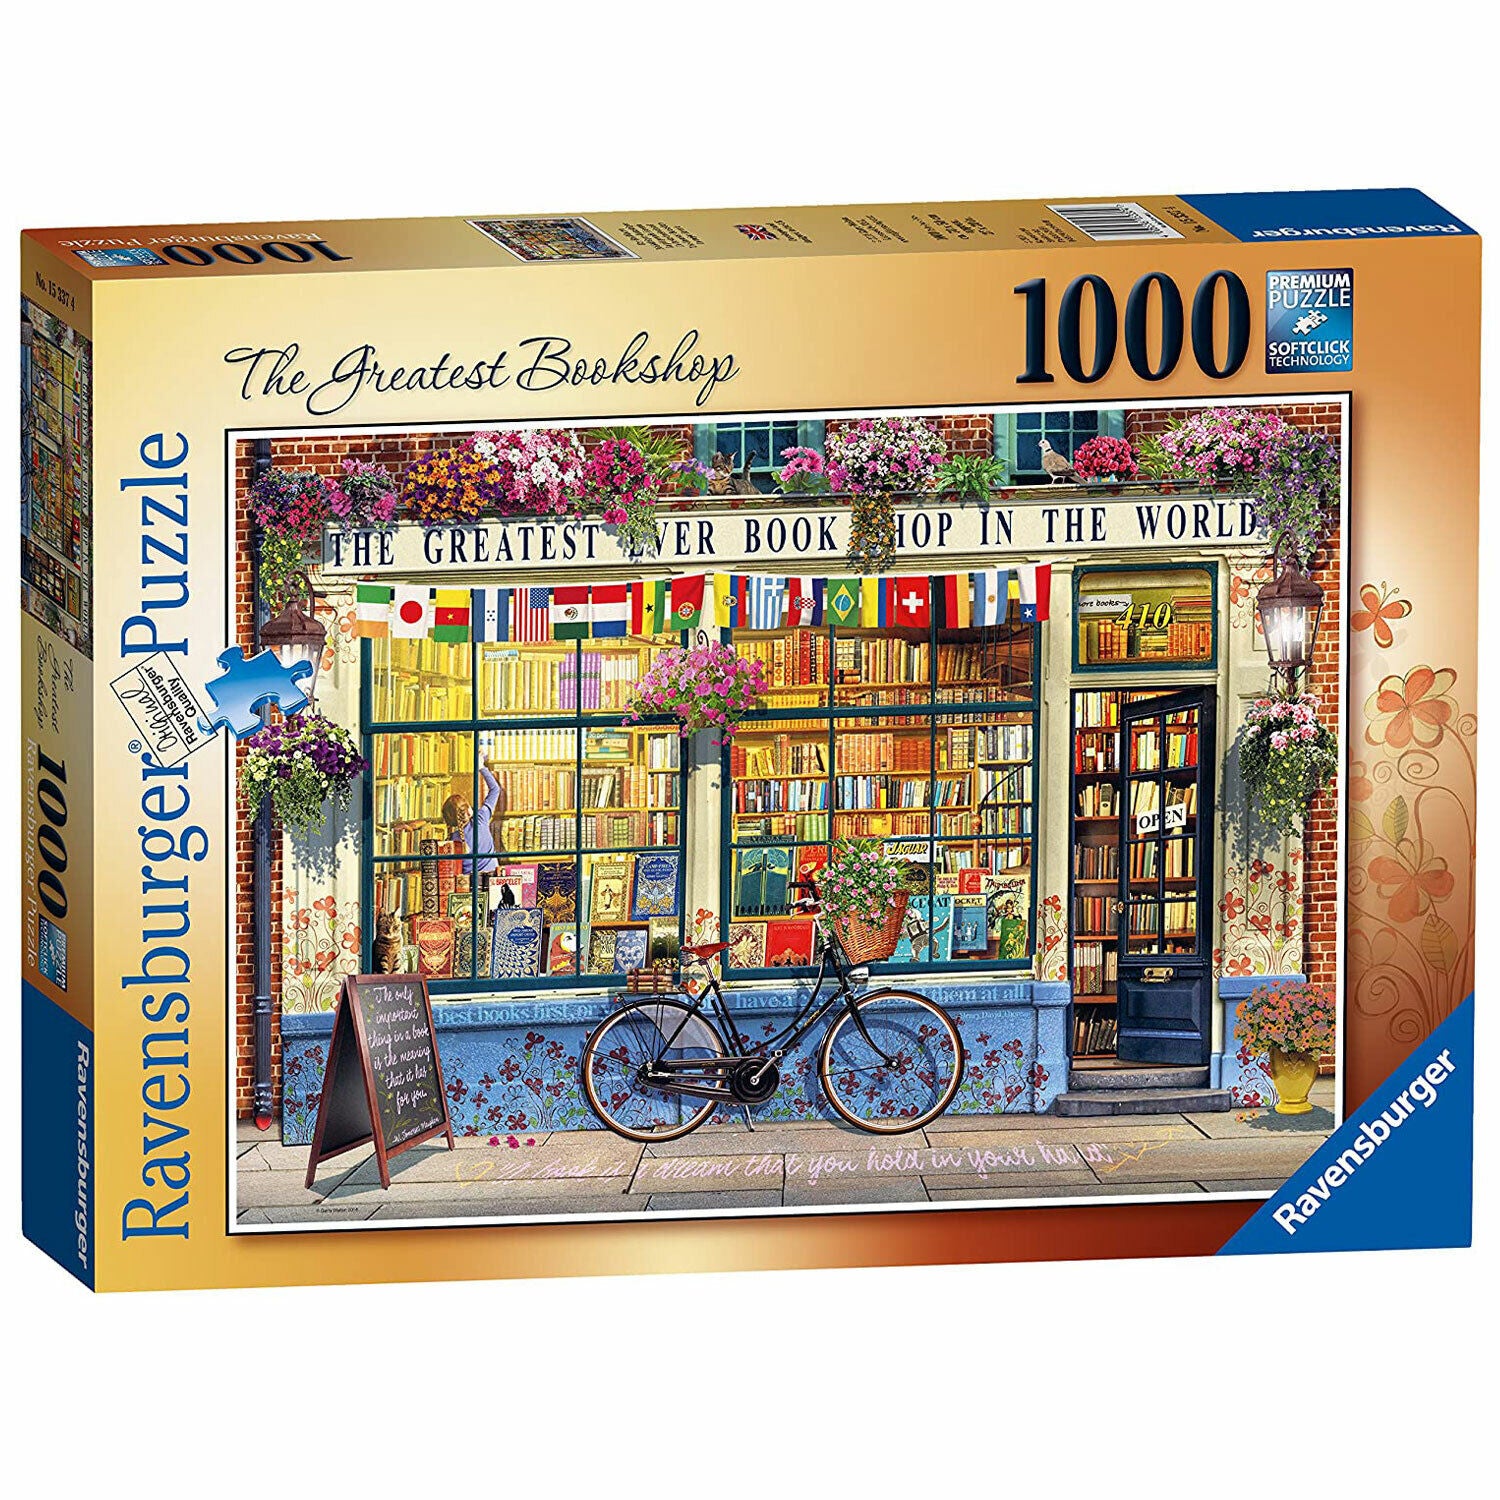 New Ravensburger The Greatest Bookshop 1000 Piece Puzzle - Sealed Box